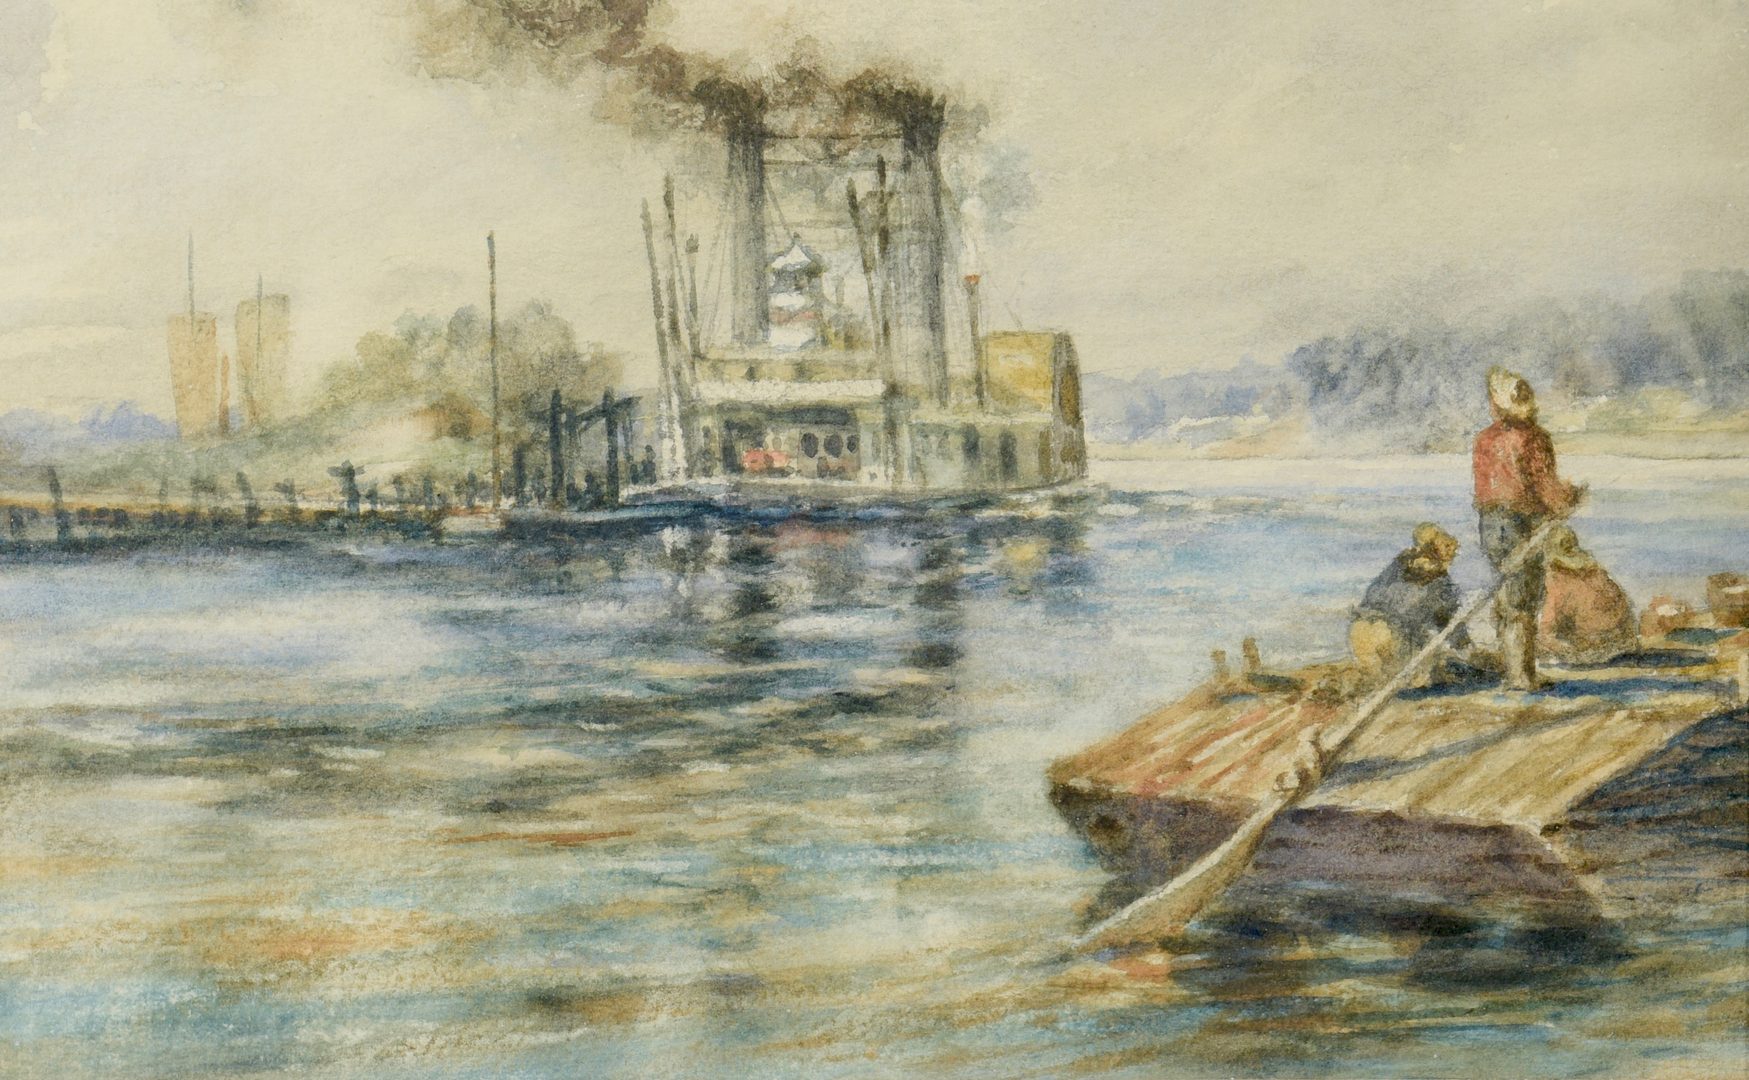 Lot 548: Robert Hopkin Landscape with Riverboat